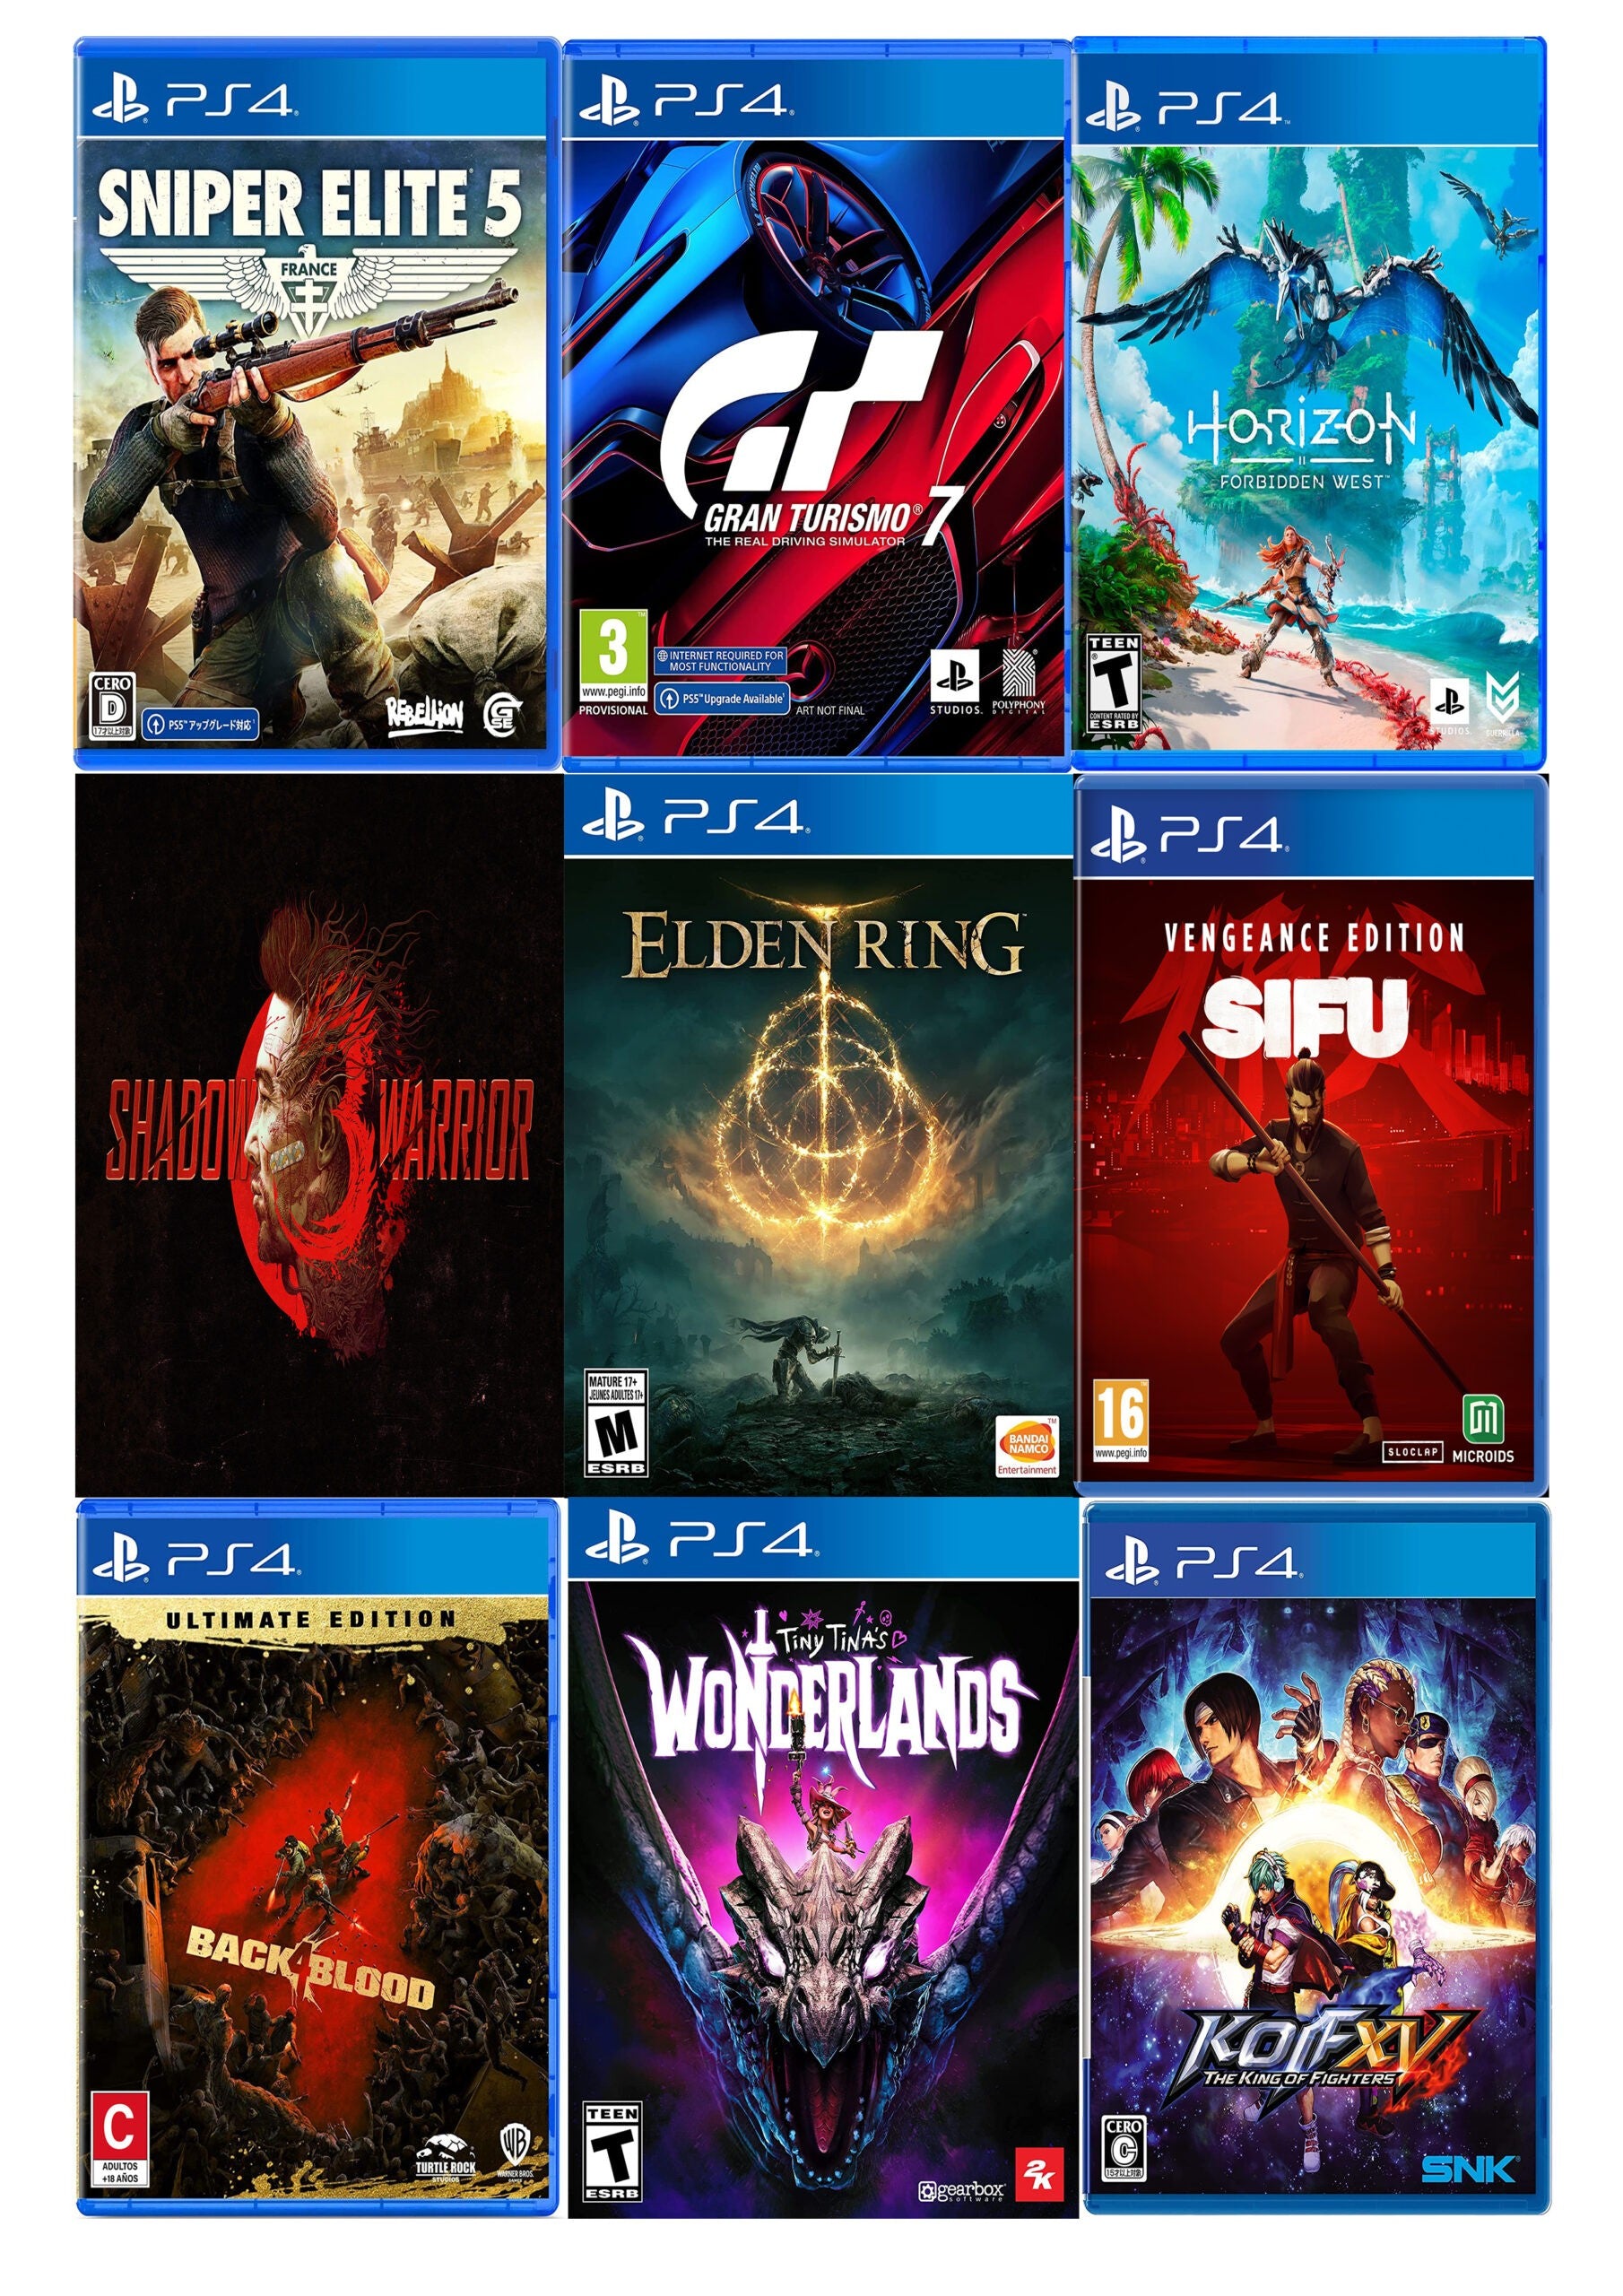 Far Cry: Primal - PS4 - ShopB - 14 anos!